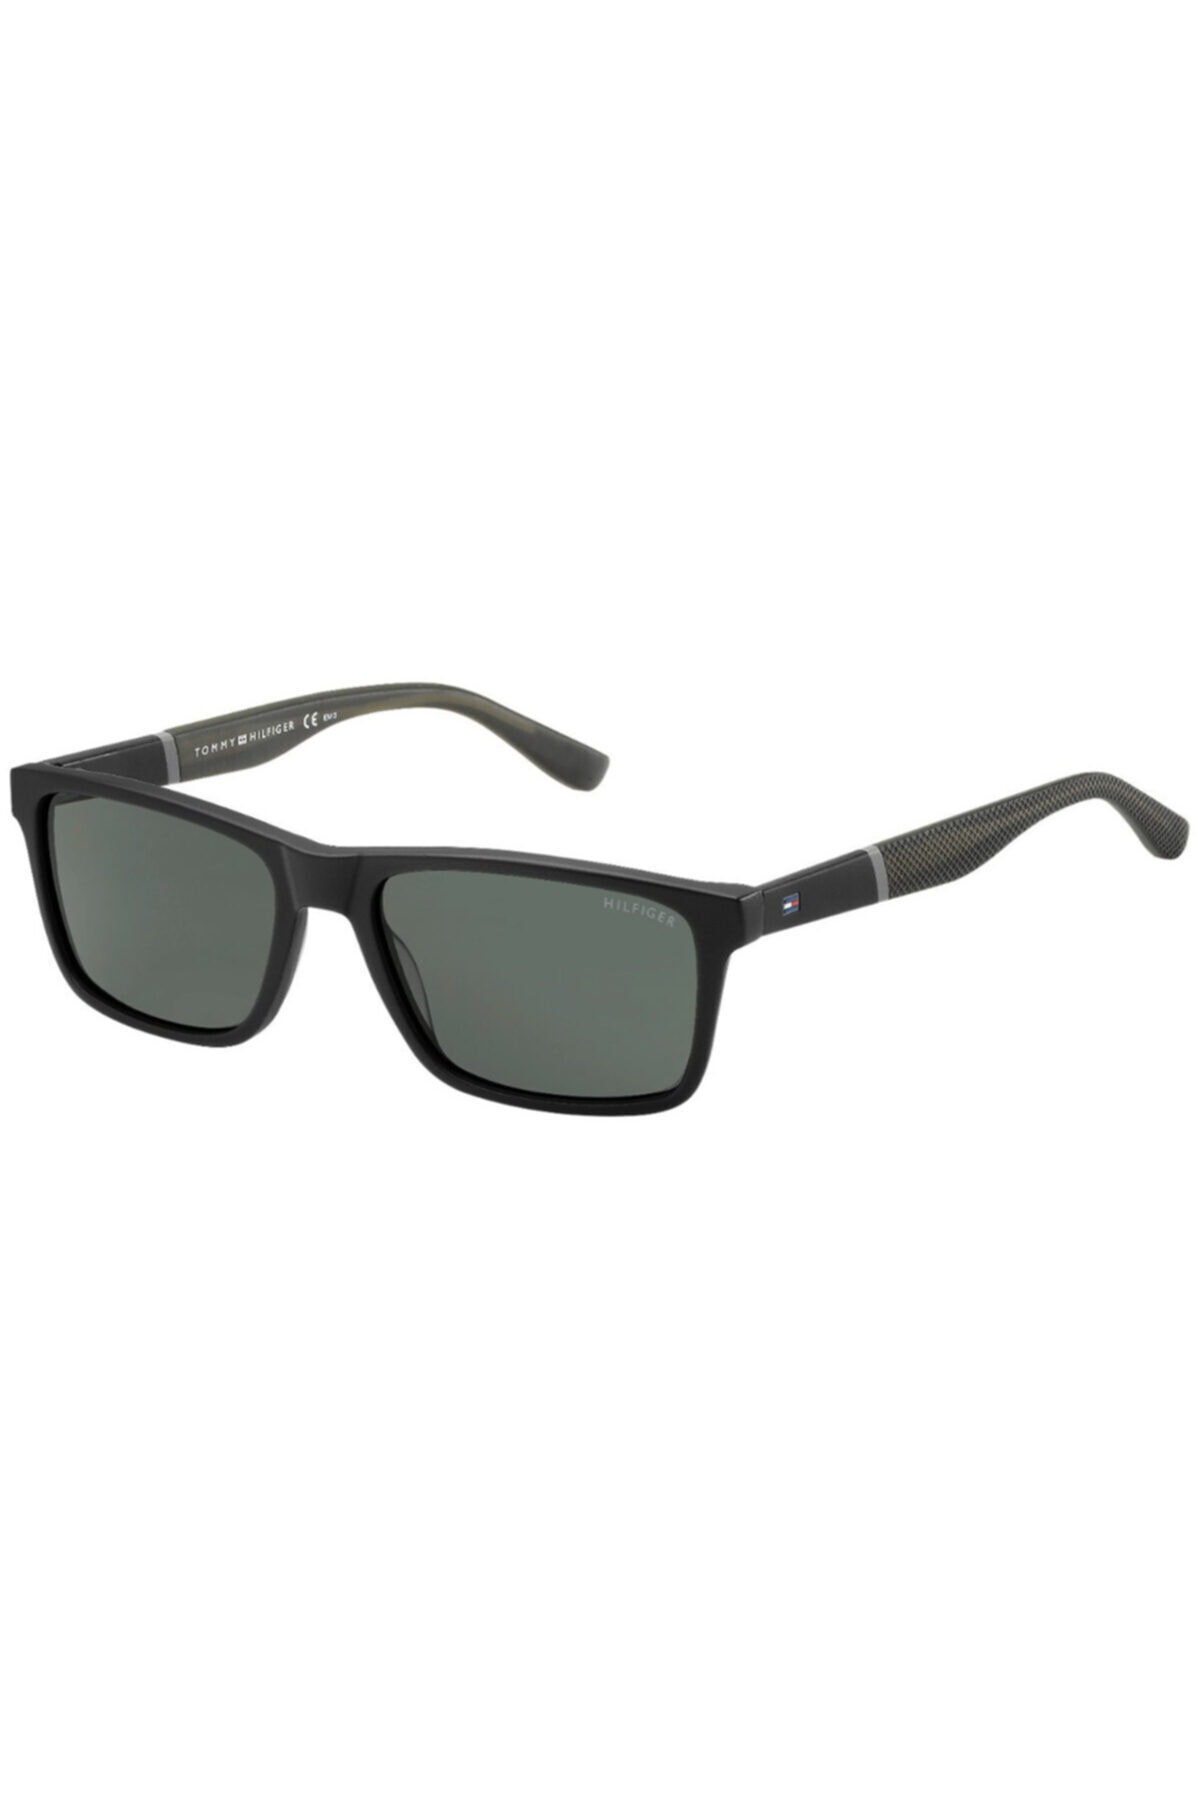 Tommy Hilfiger Sunglasses Unisex Dikdörtgen Güneş Gözlüğü TH 1405/S KUN P9-T1